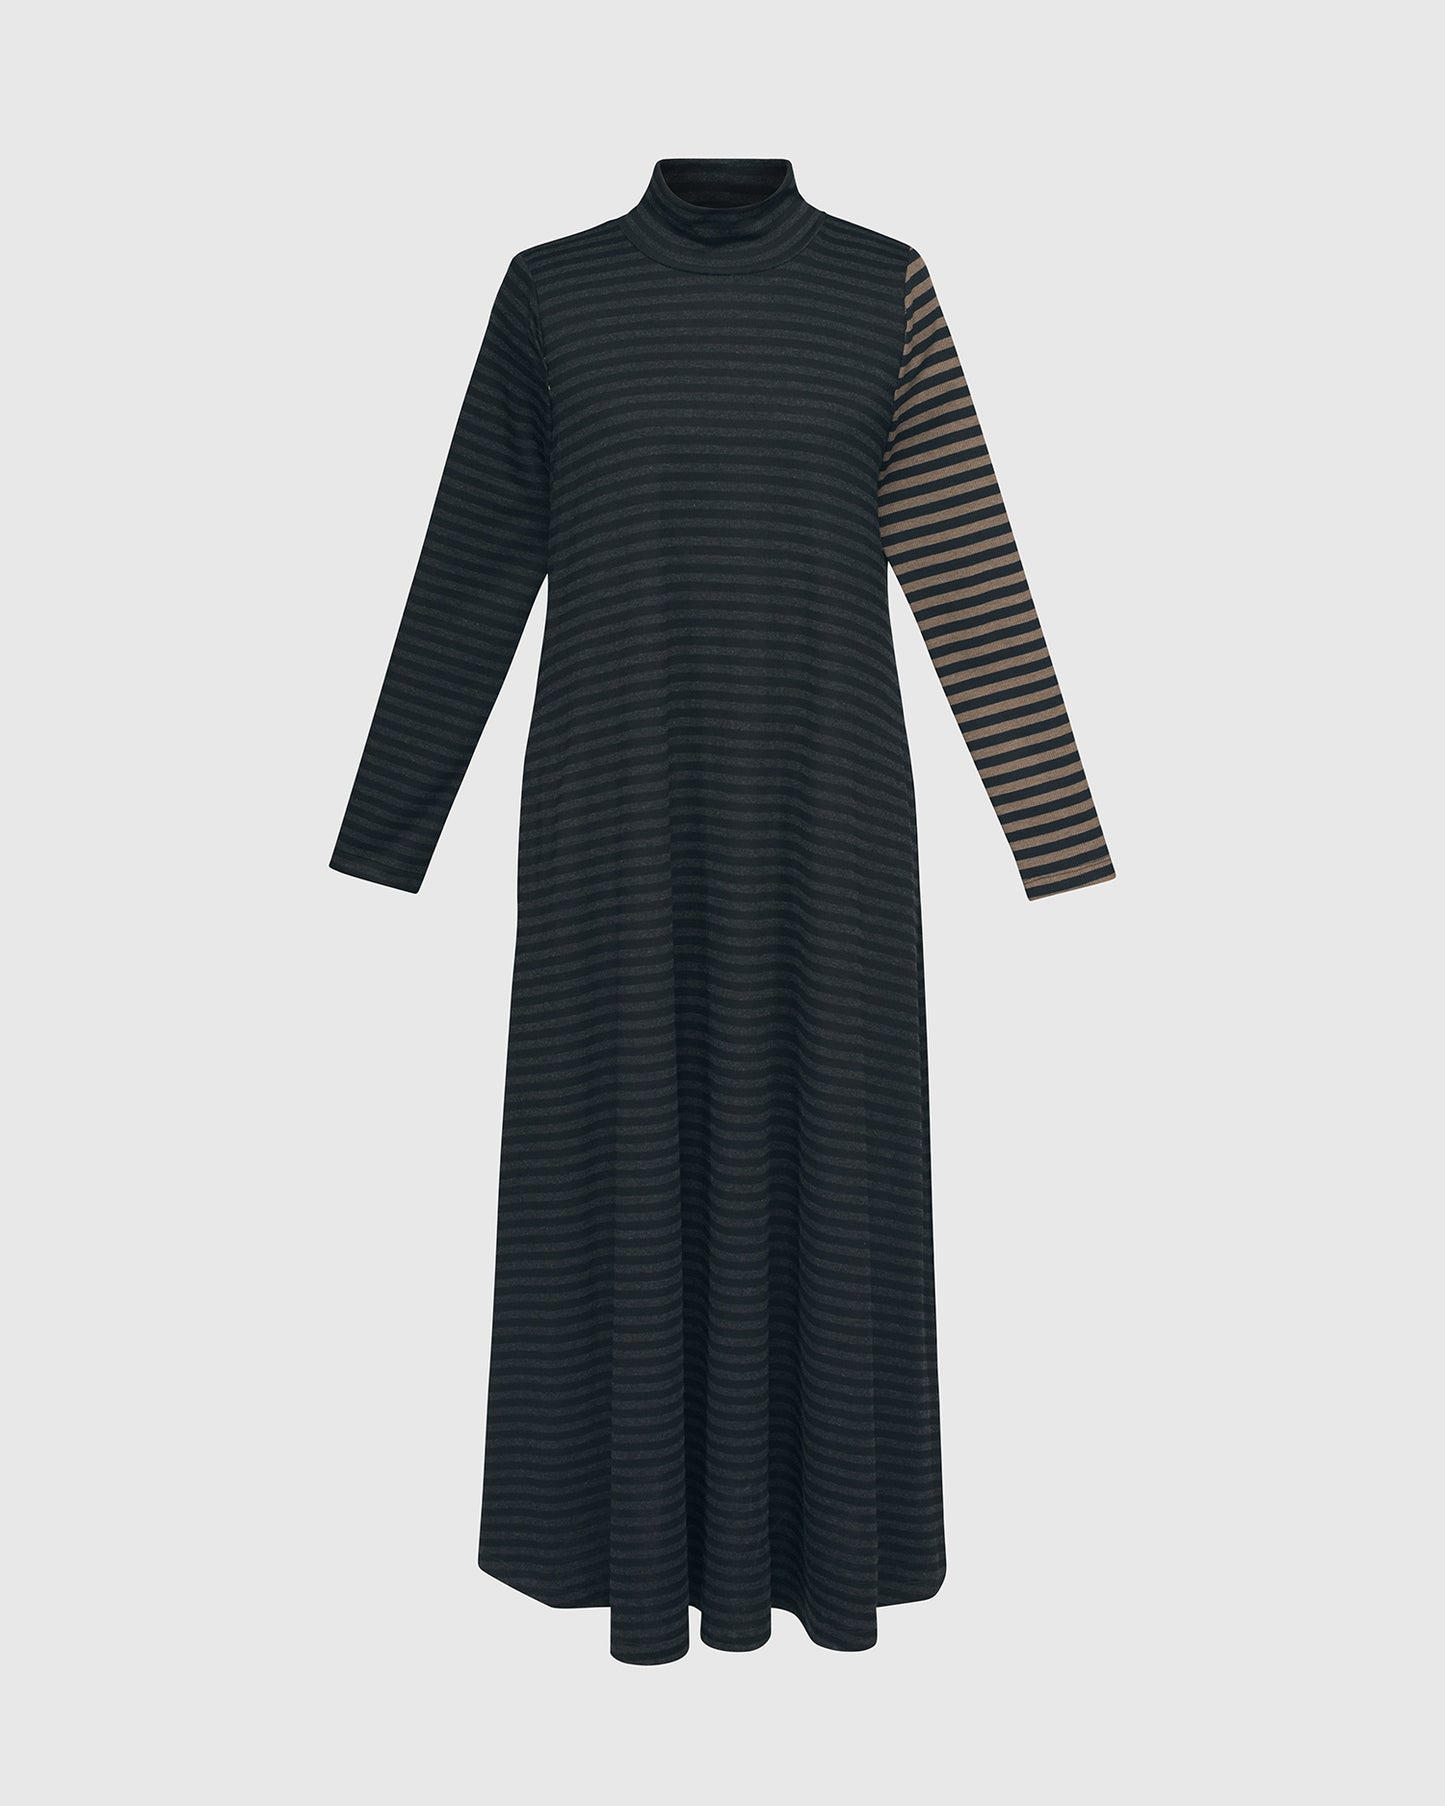 Urban Mockneck Swing Dress, Stripes by Alembika